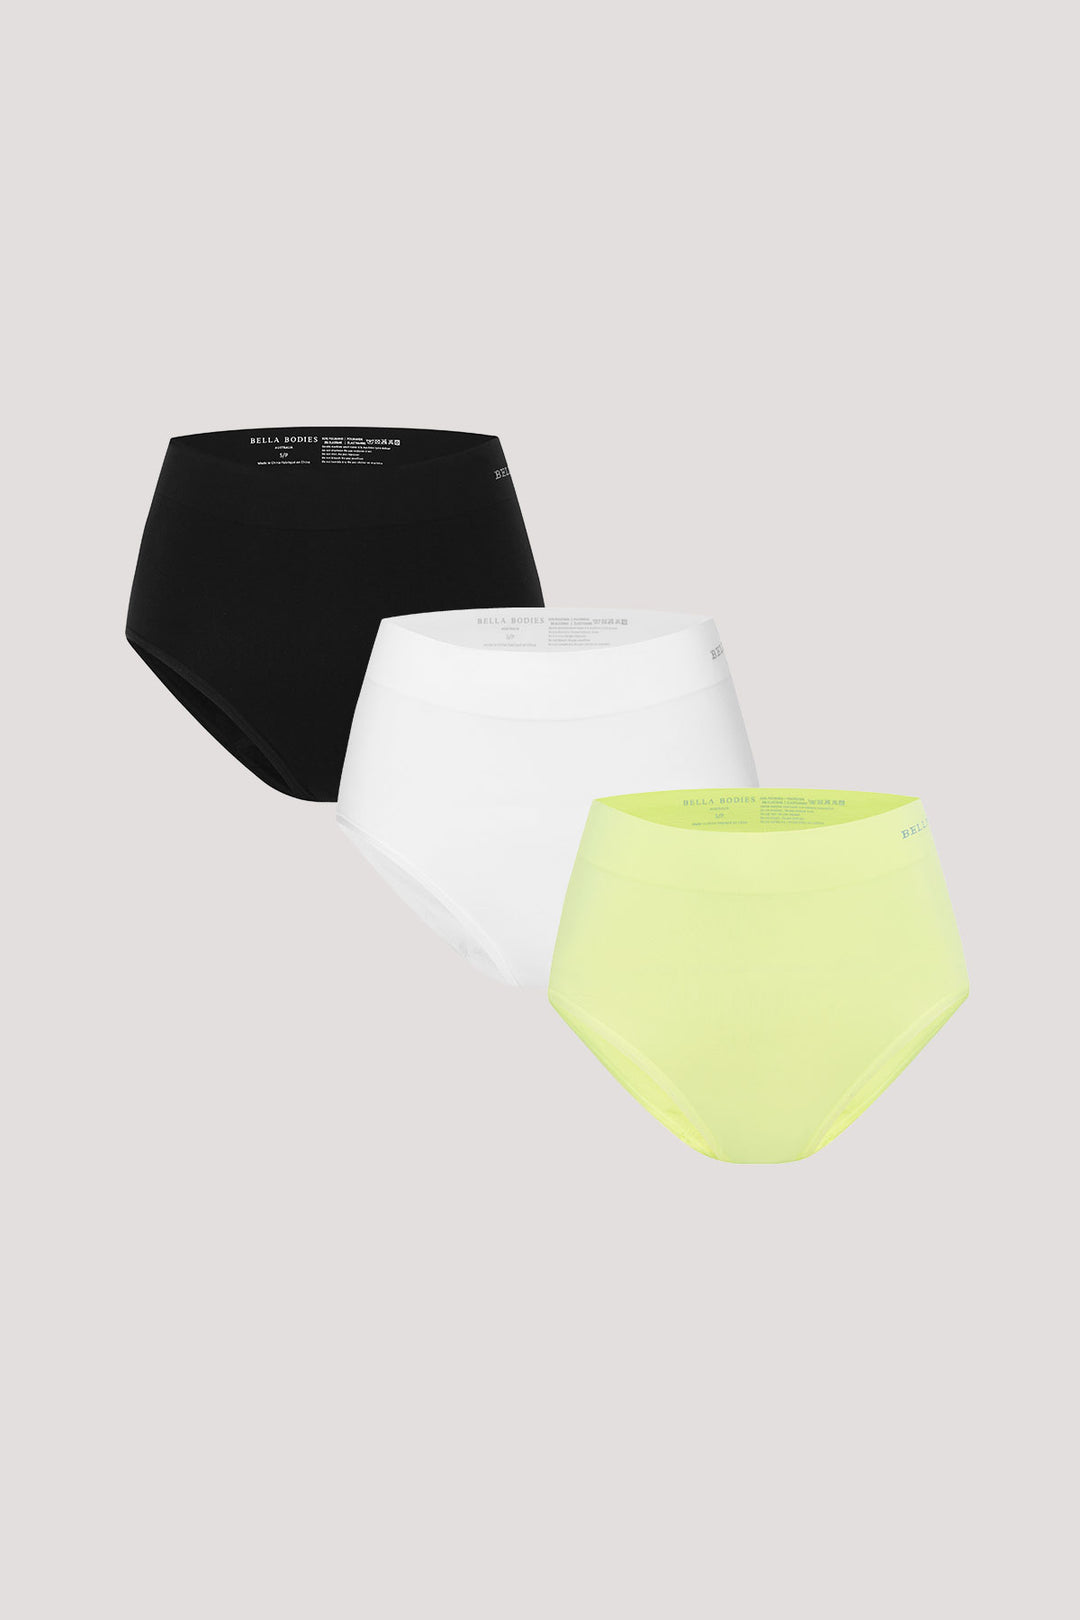 Women's High Waist Underwear 3 pack I Bella Bodies Australia | Black, White and Soft Lime